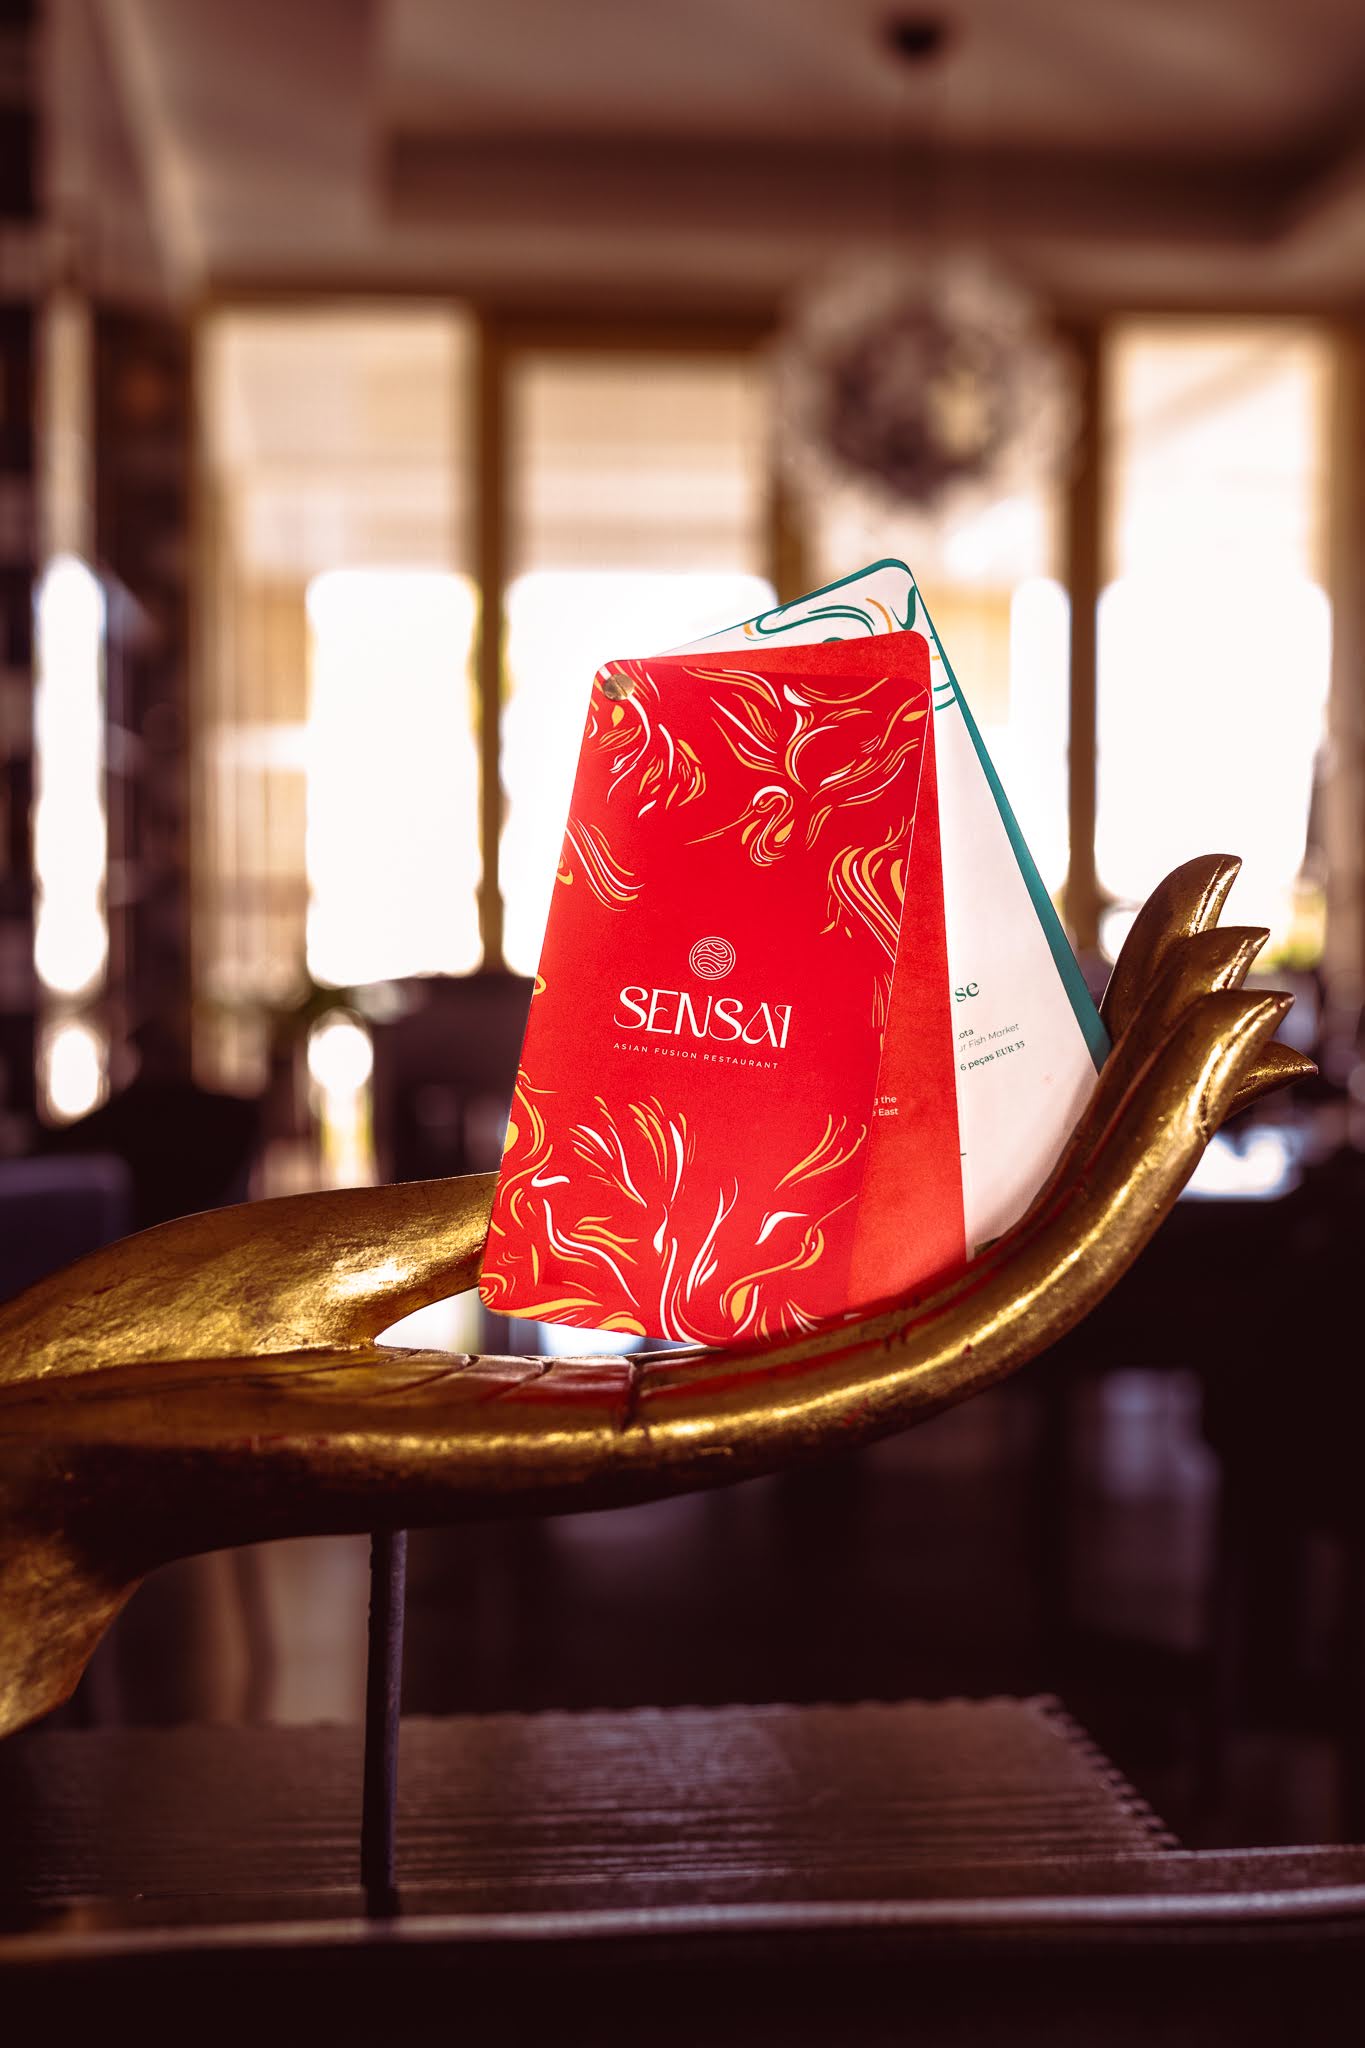 Sensai Asian Fusion Restaurant Branding Led by KOBU Agency for the Luxury Hospitality Brand Anantara